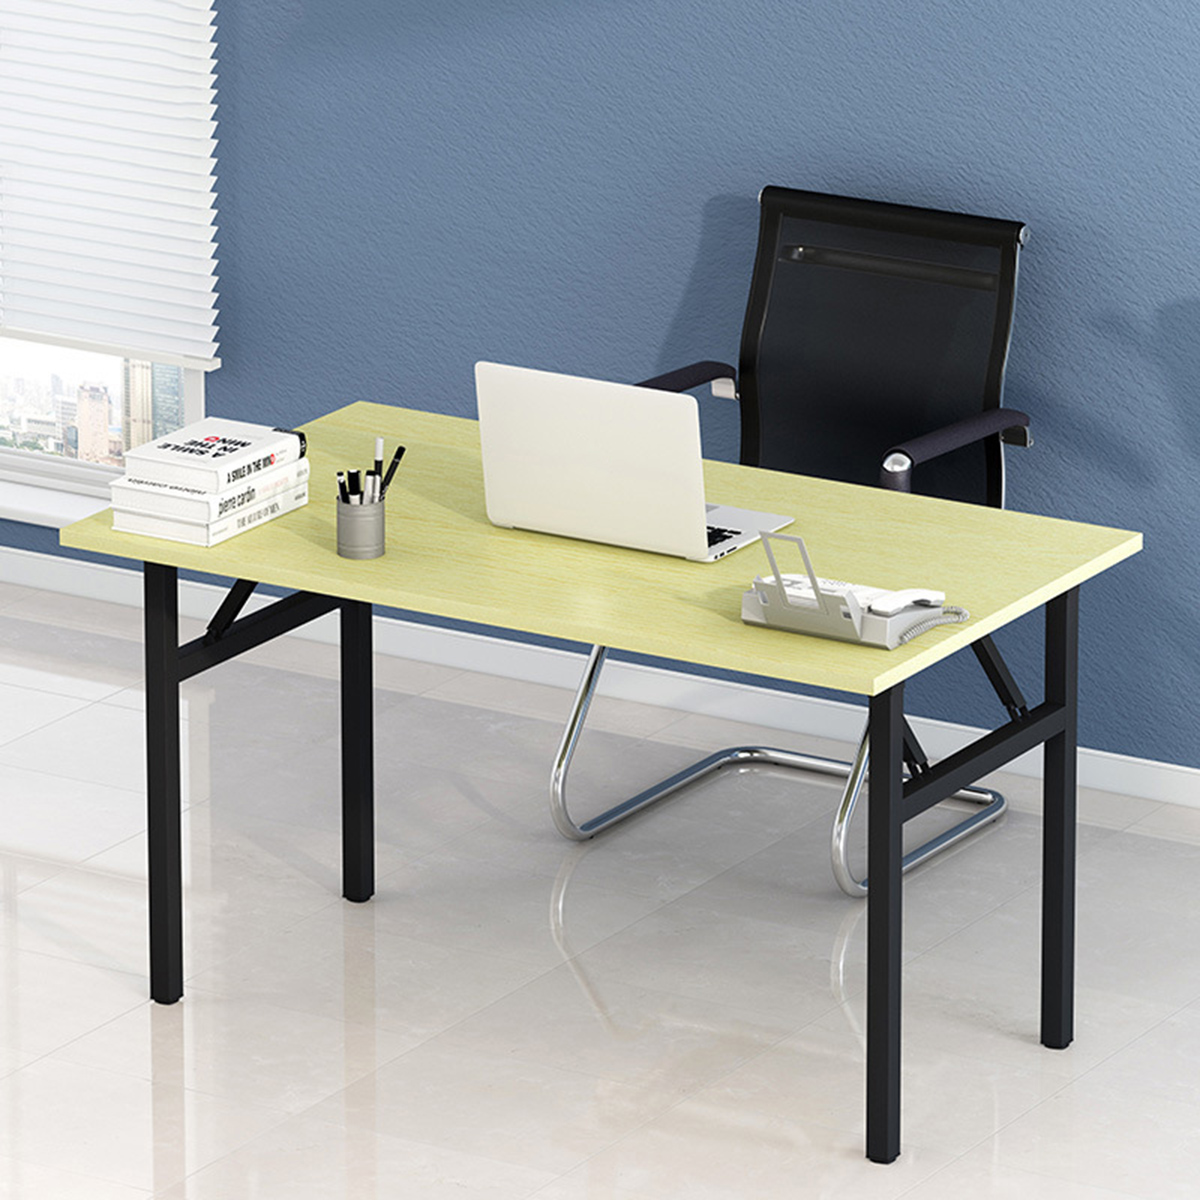 Foldable-Computer-Laptop-Desk-Writing-Study-Table-Desktop-Workstation-Home-Office-Furniture-1750804-7